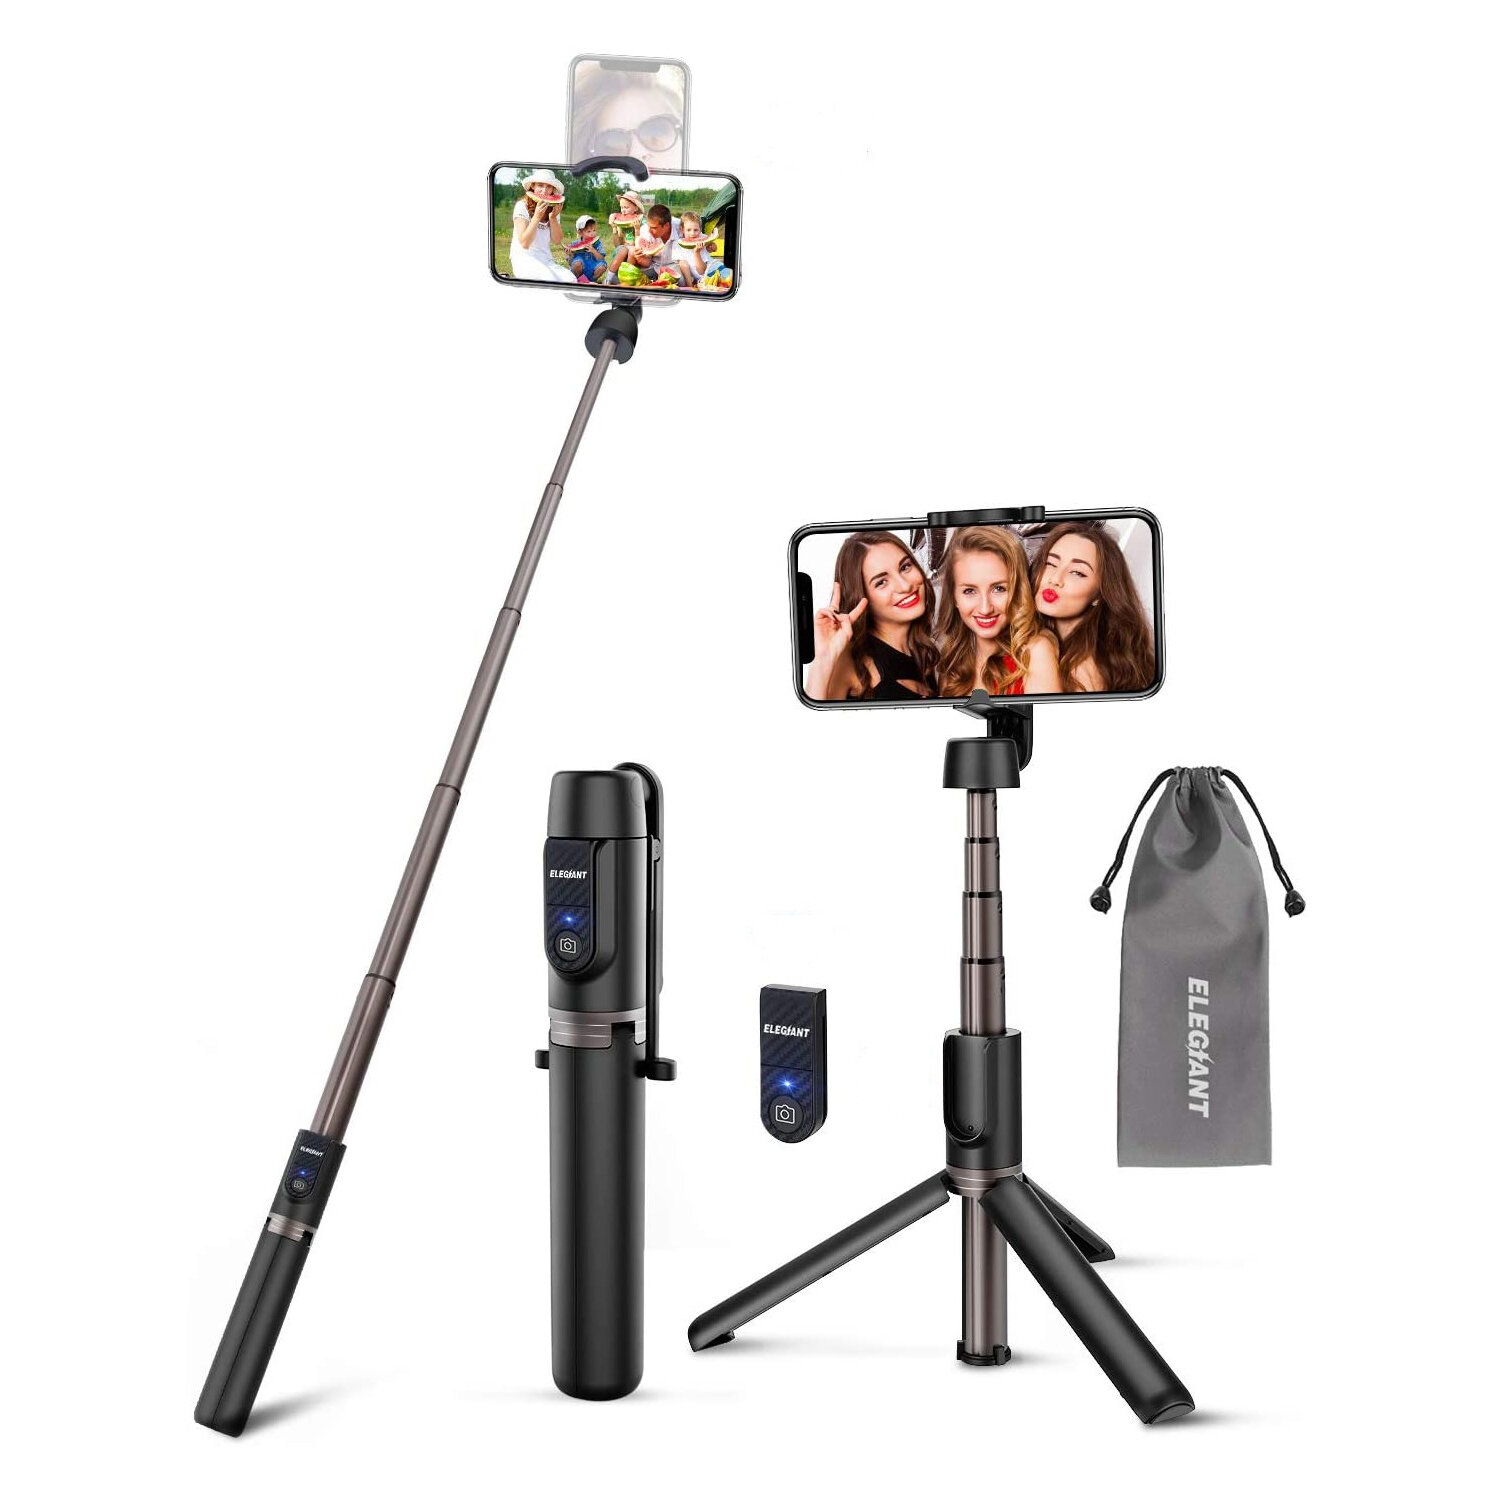 

ELEGIANT 2 in1 Extendable Дистанционное Управление Selfie Палка Штатив Mobile Selfie Палка с затвором Bluetooth и держат